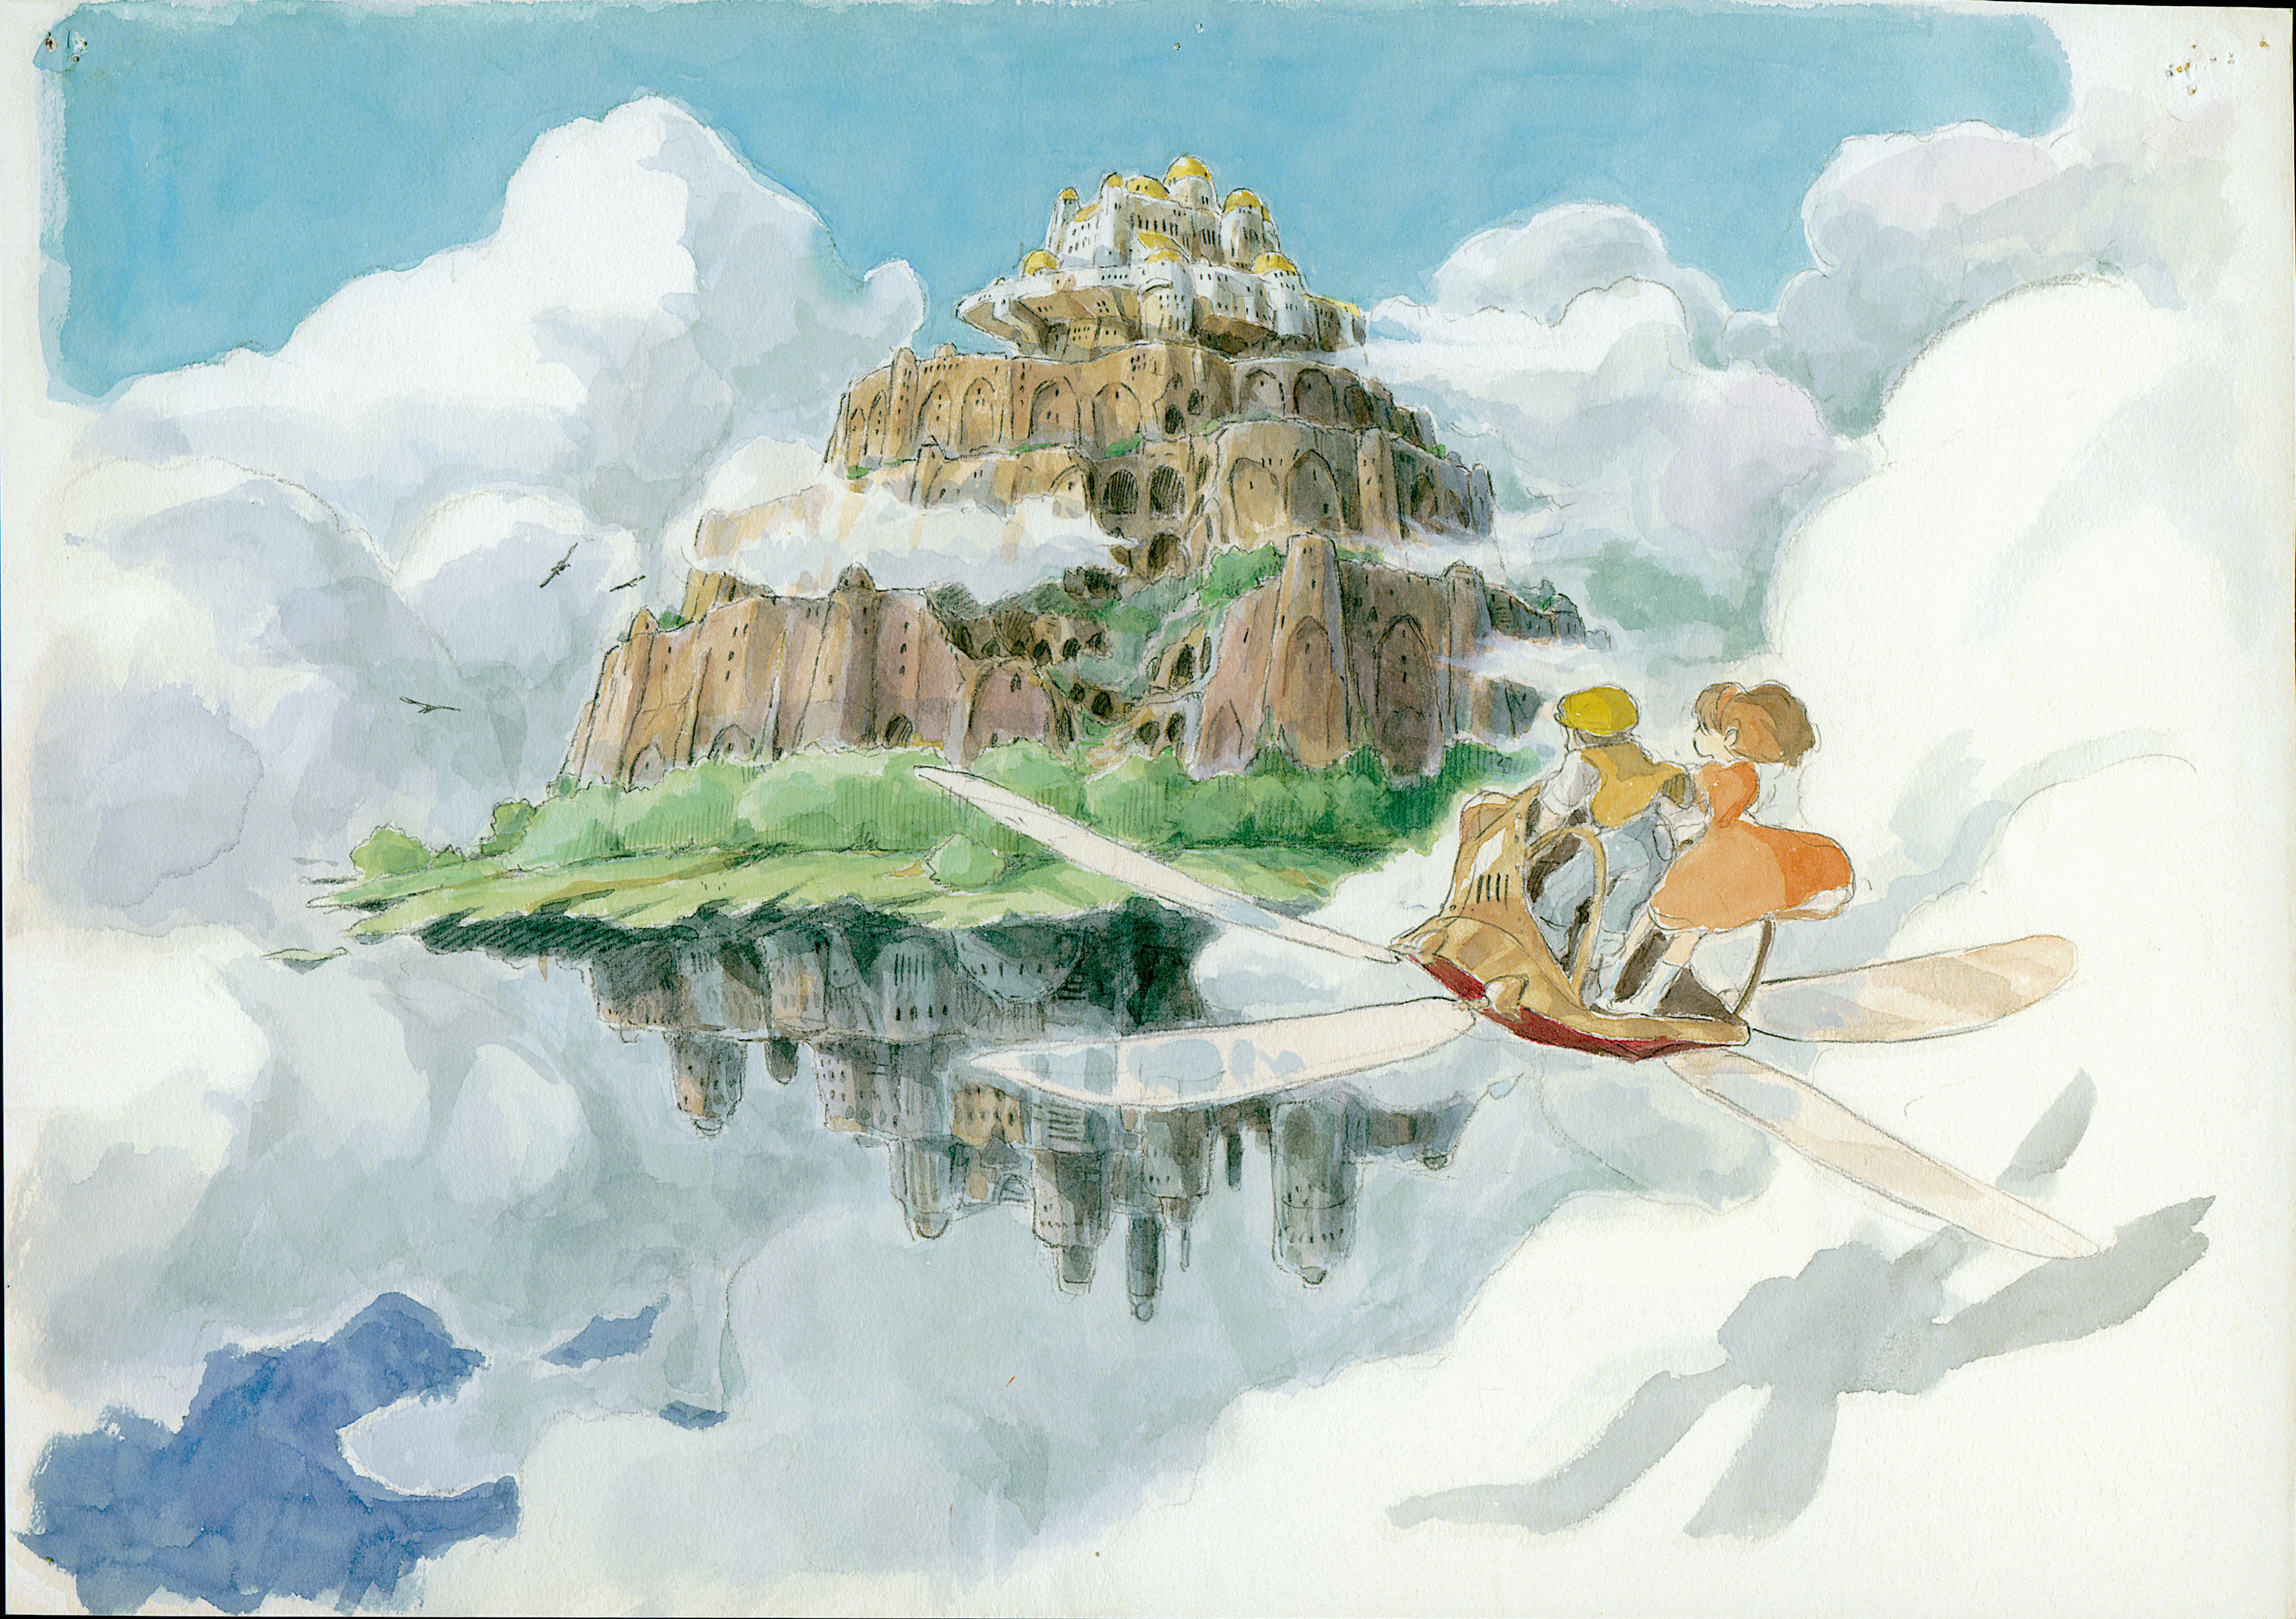 pazu, Studio Ghibli, Laputa castle in the sky, Sheeta wallpaper